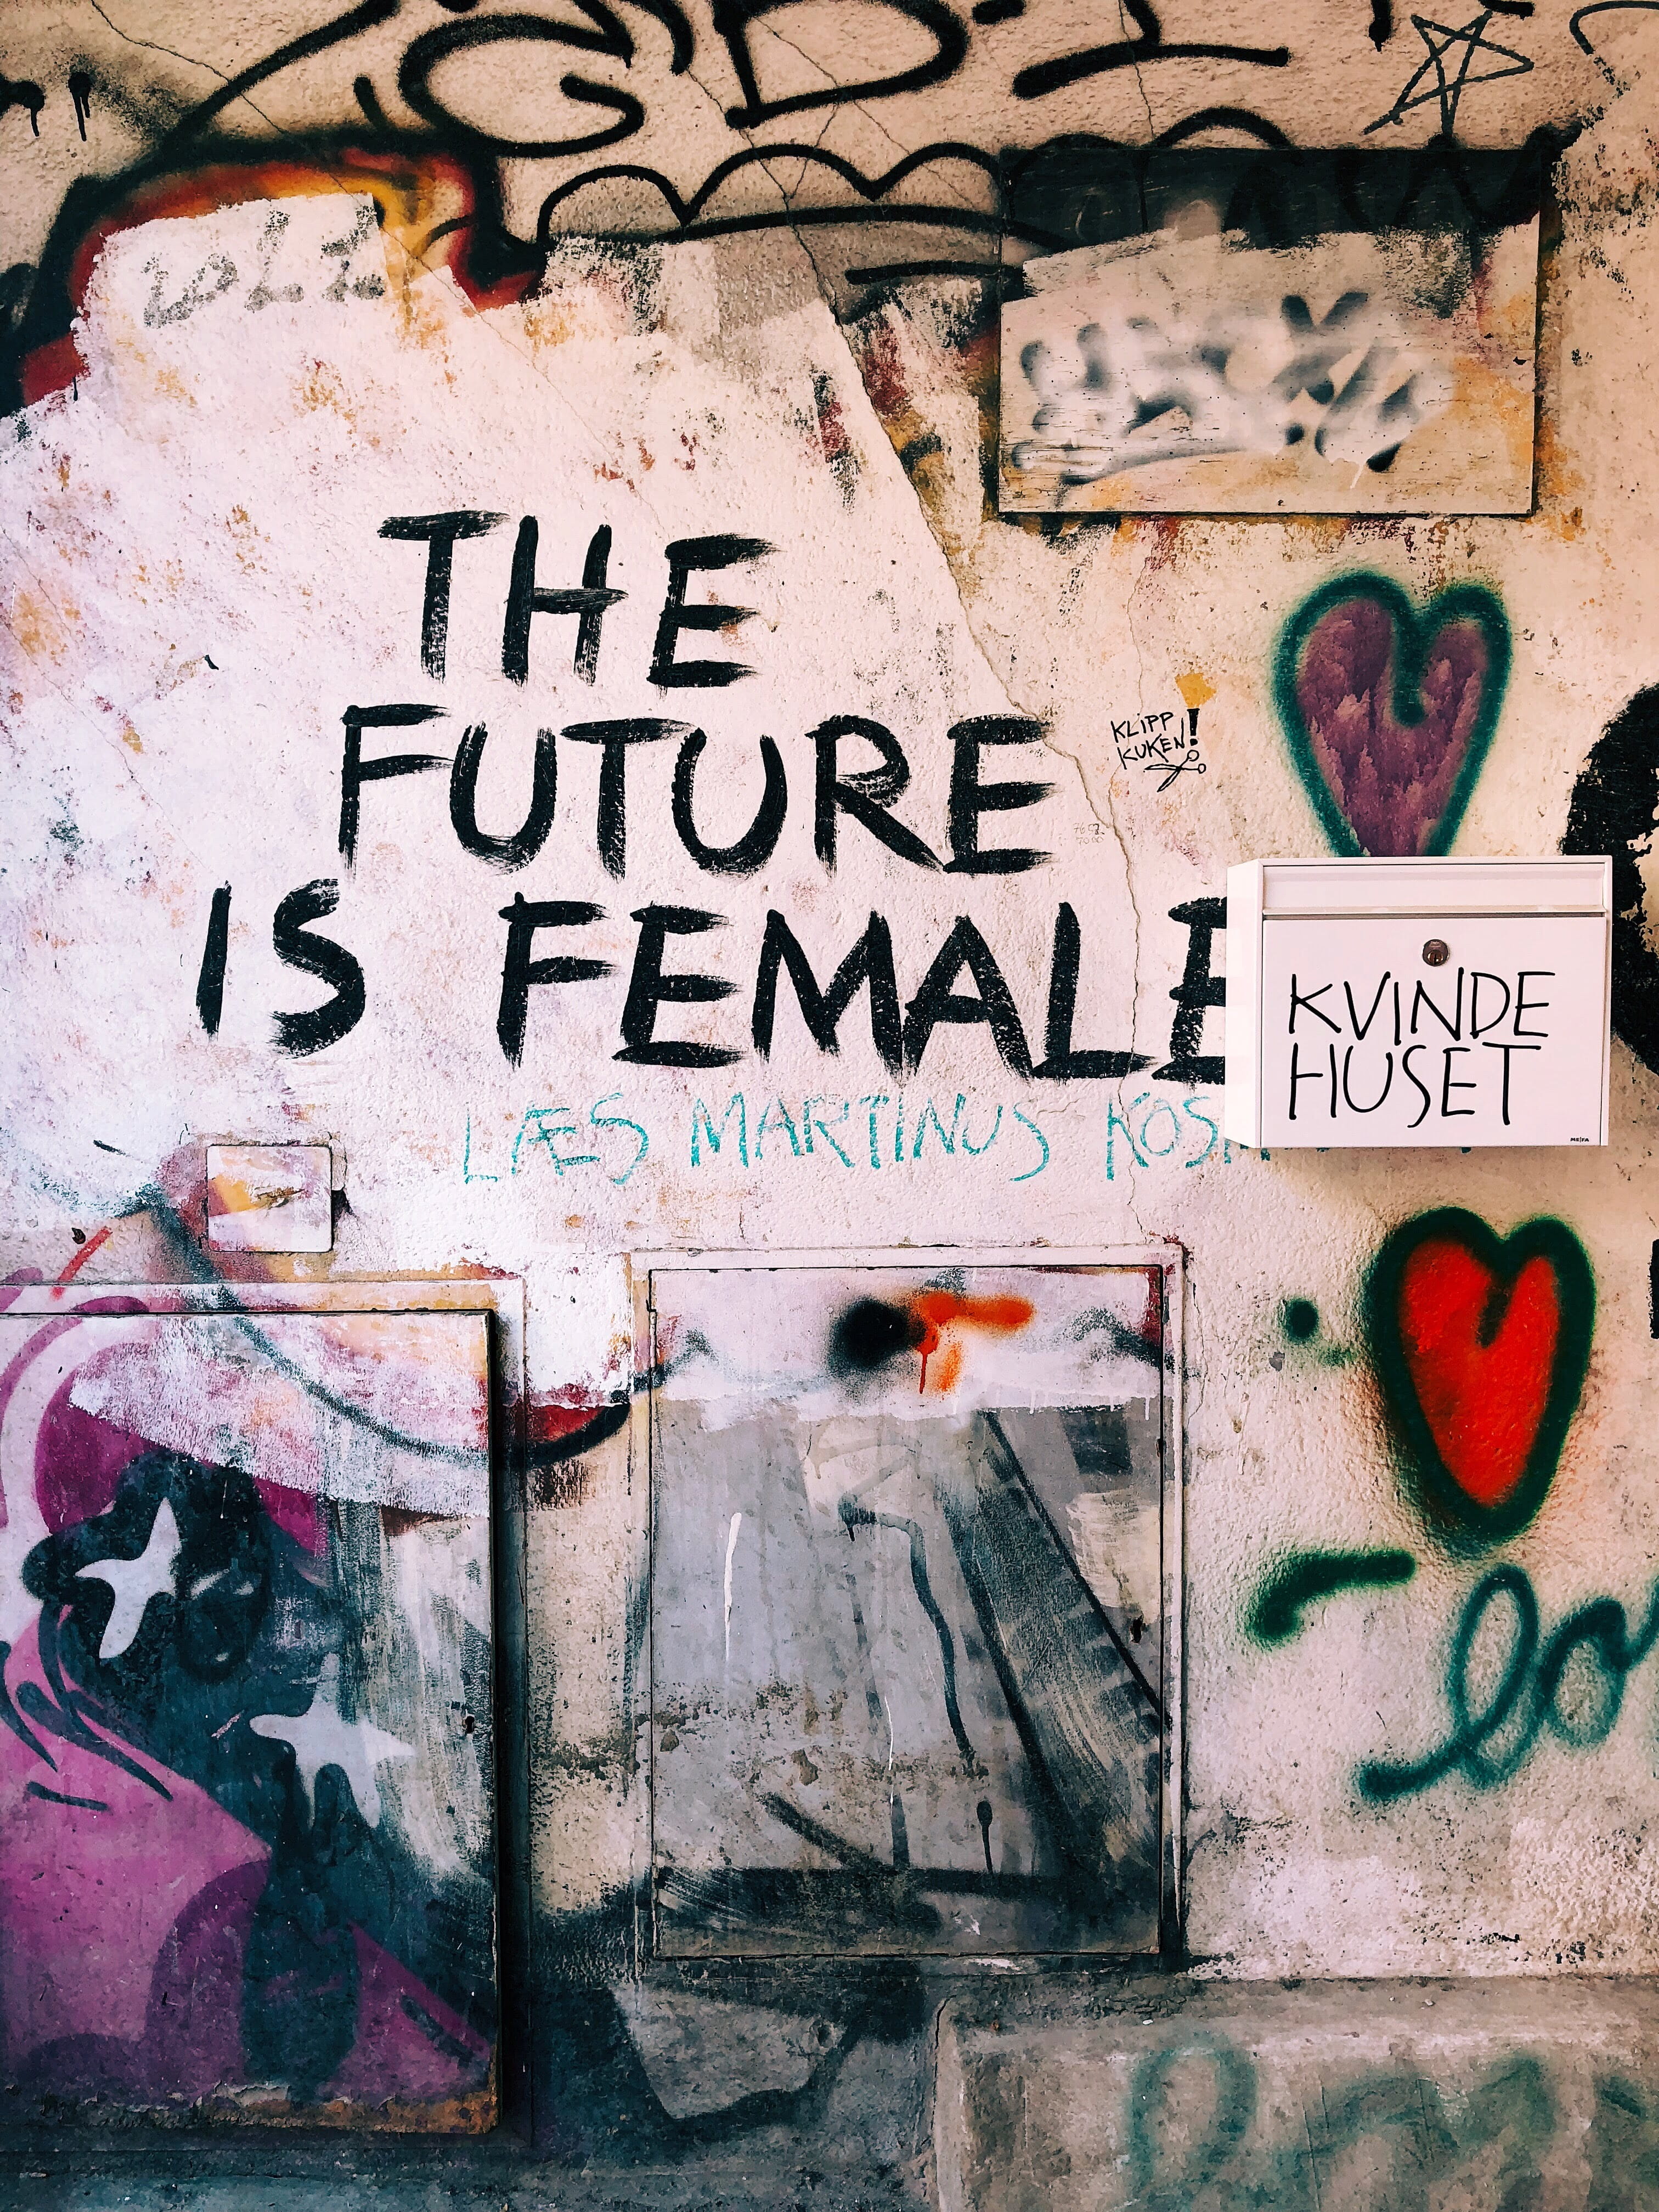 female empowerment, grafitti, future, street art, political